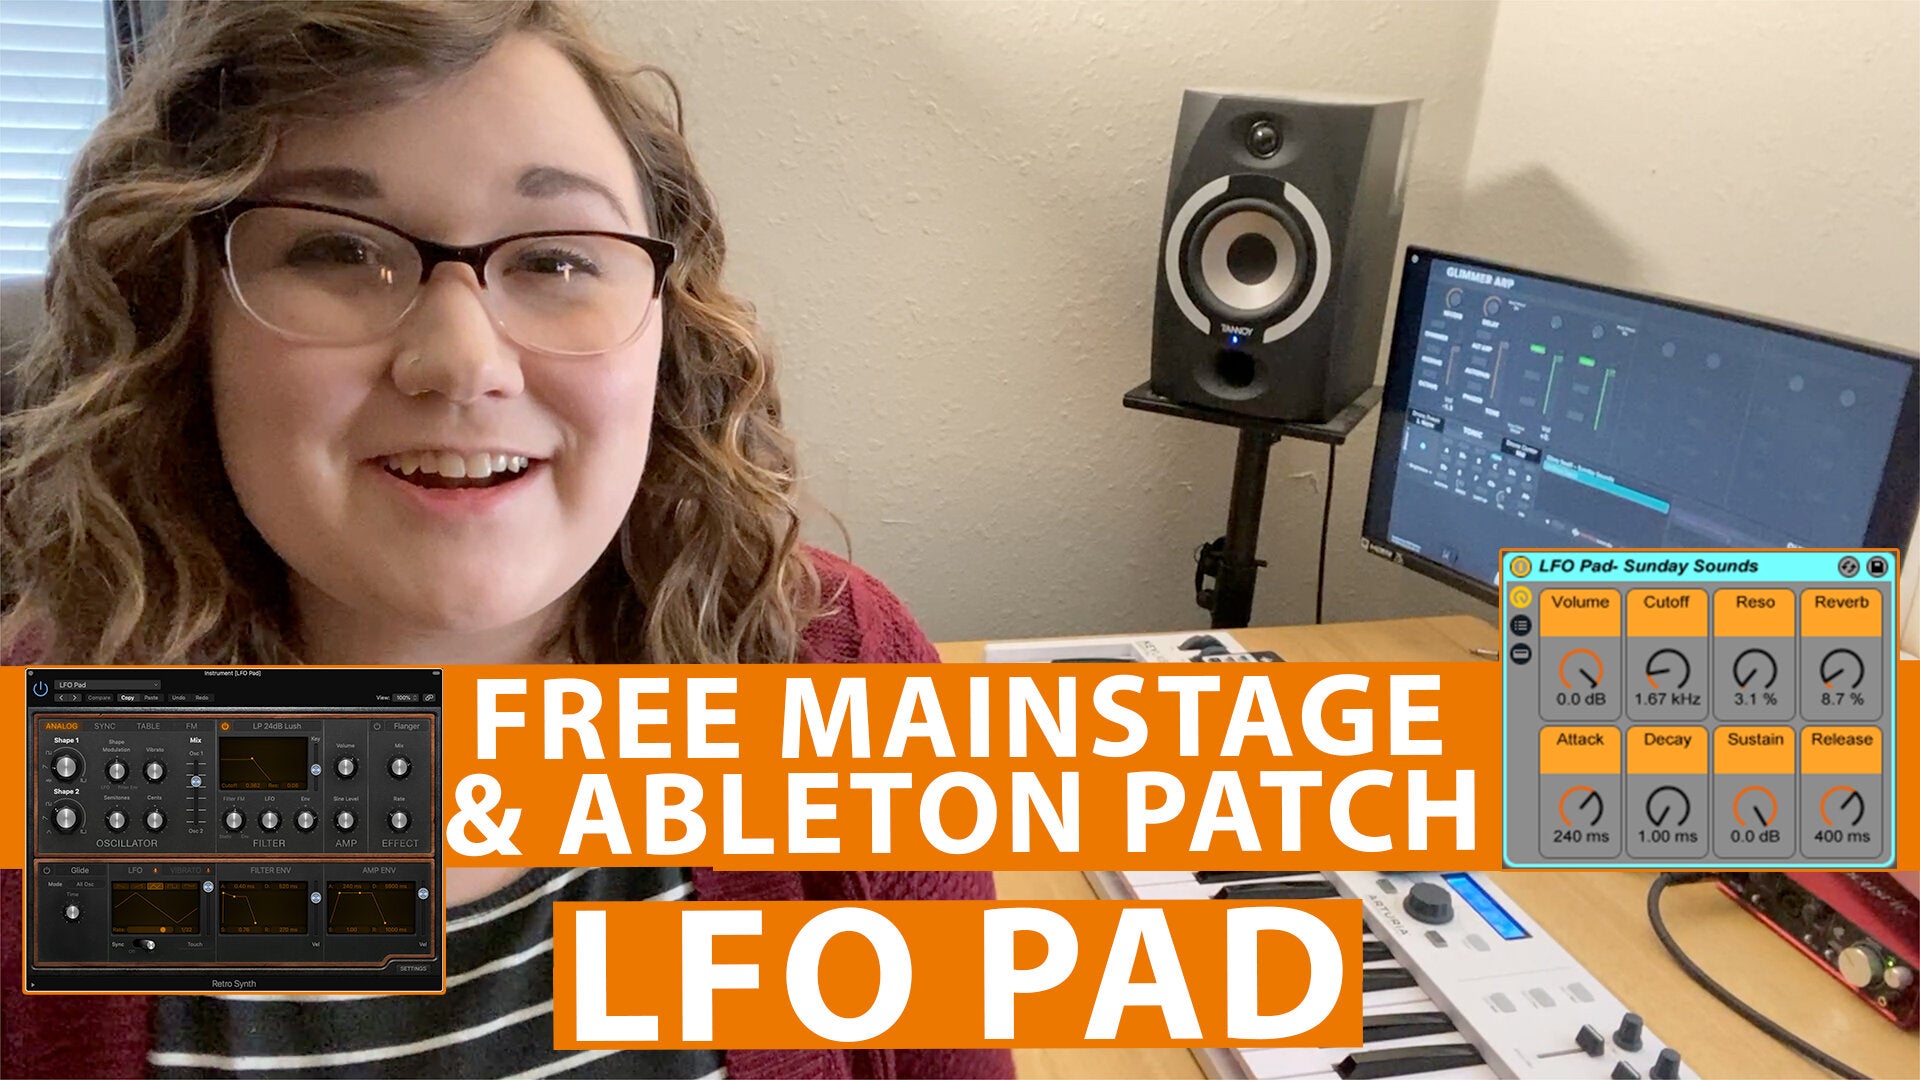 Free MainStage & Ableton Worship Patch! - LFO Pad